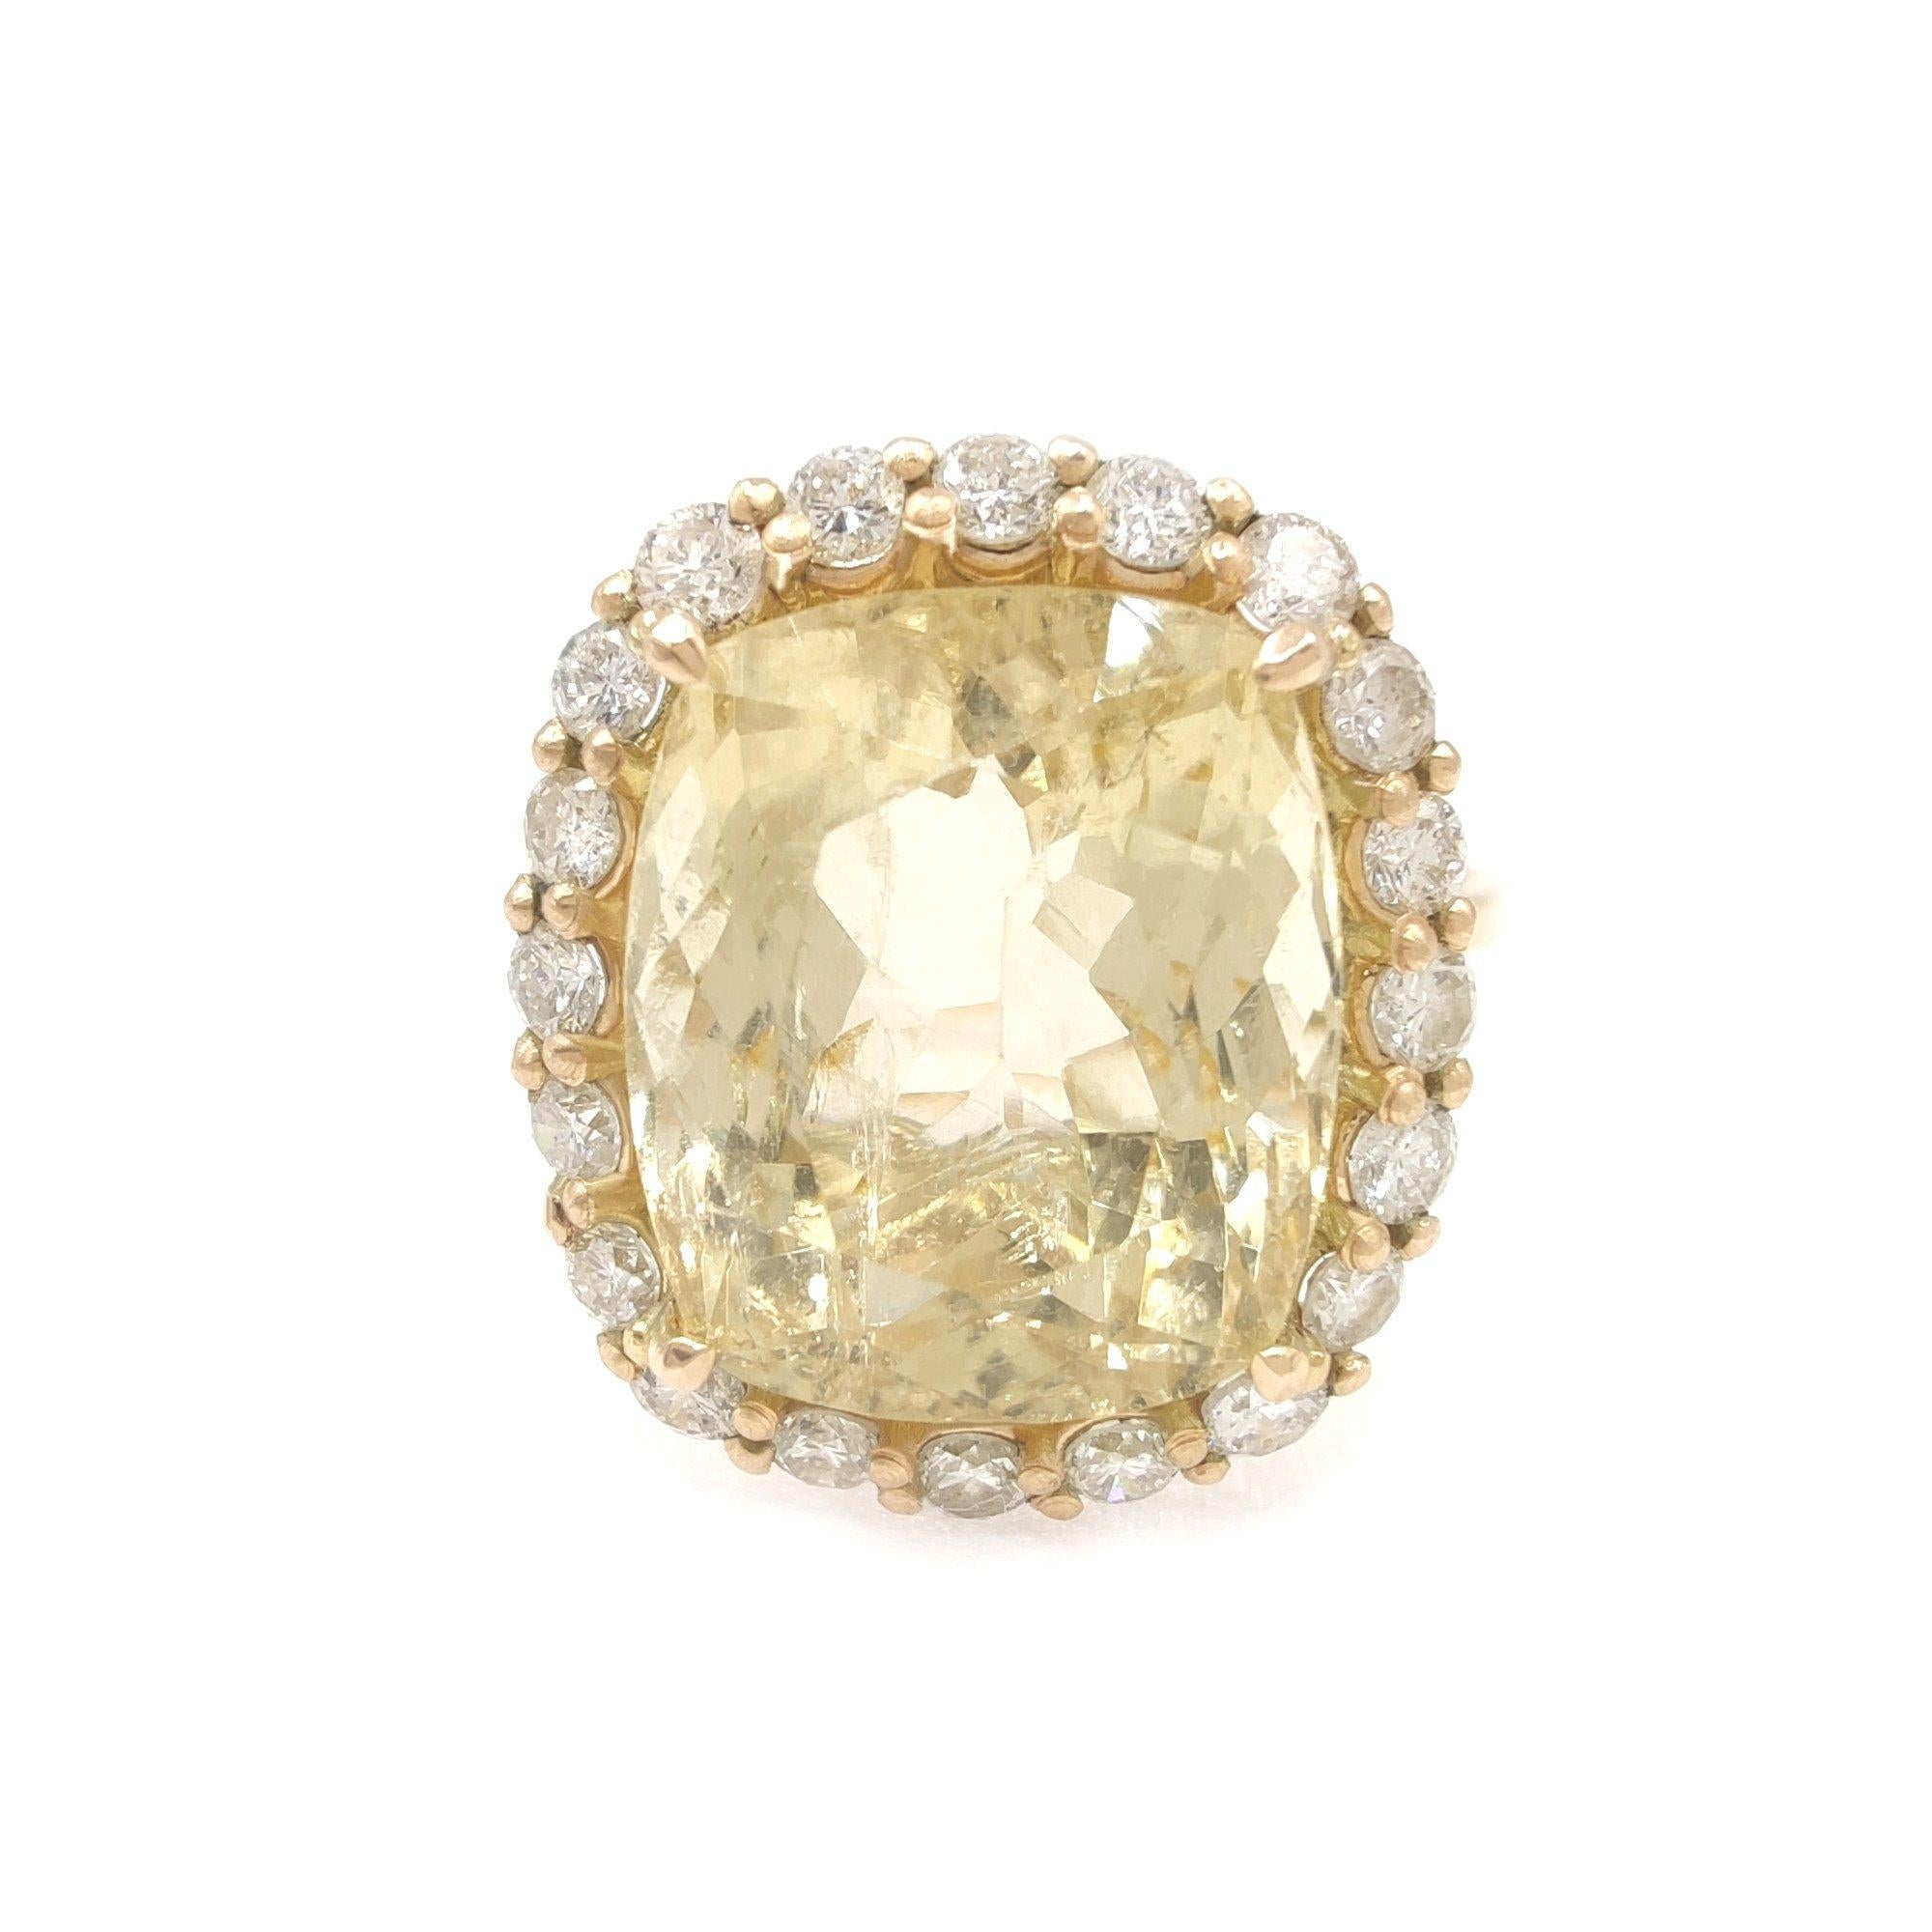 Cushion Cut Gemstone 14k gold ring  Certified Tourmaline Diamond Gemstone Halo Cocktail ring